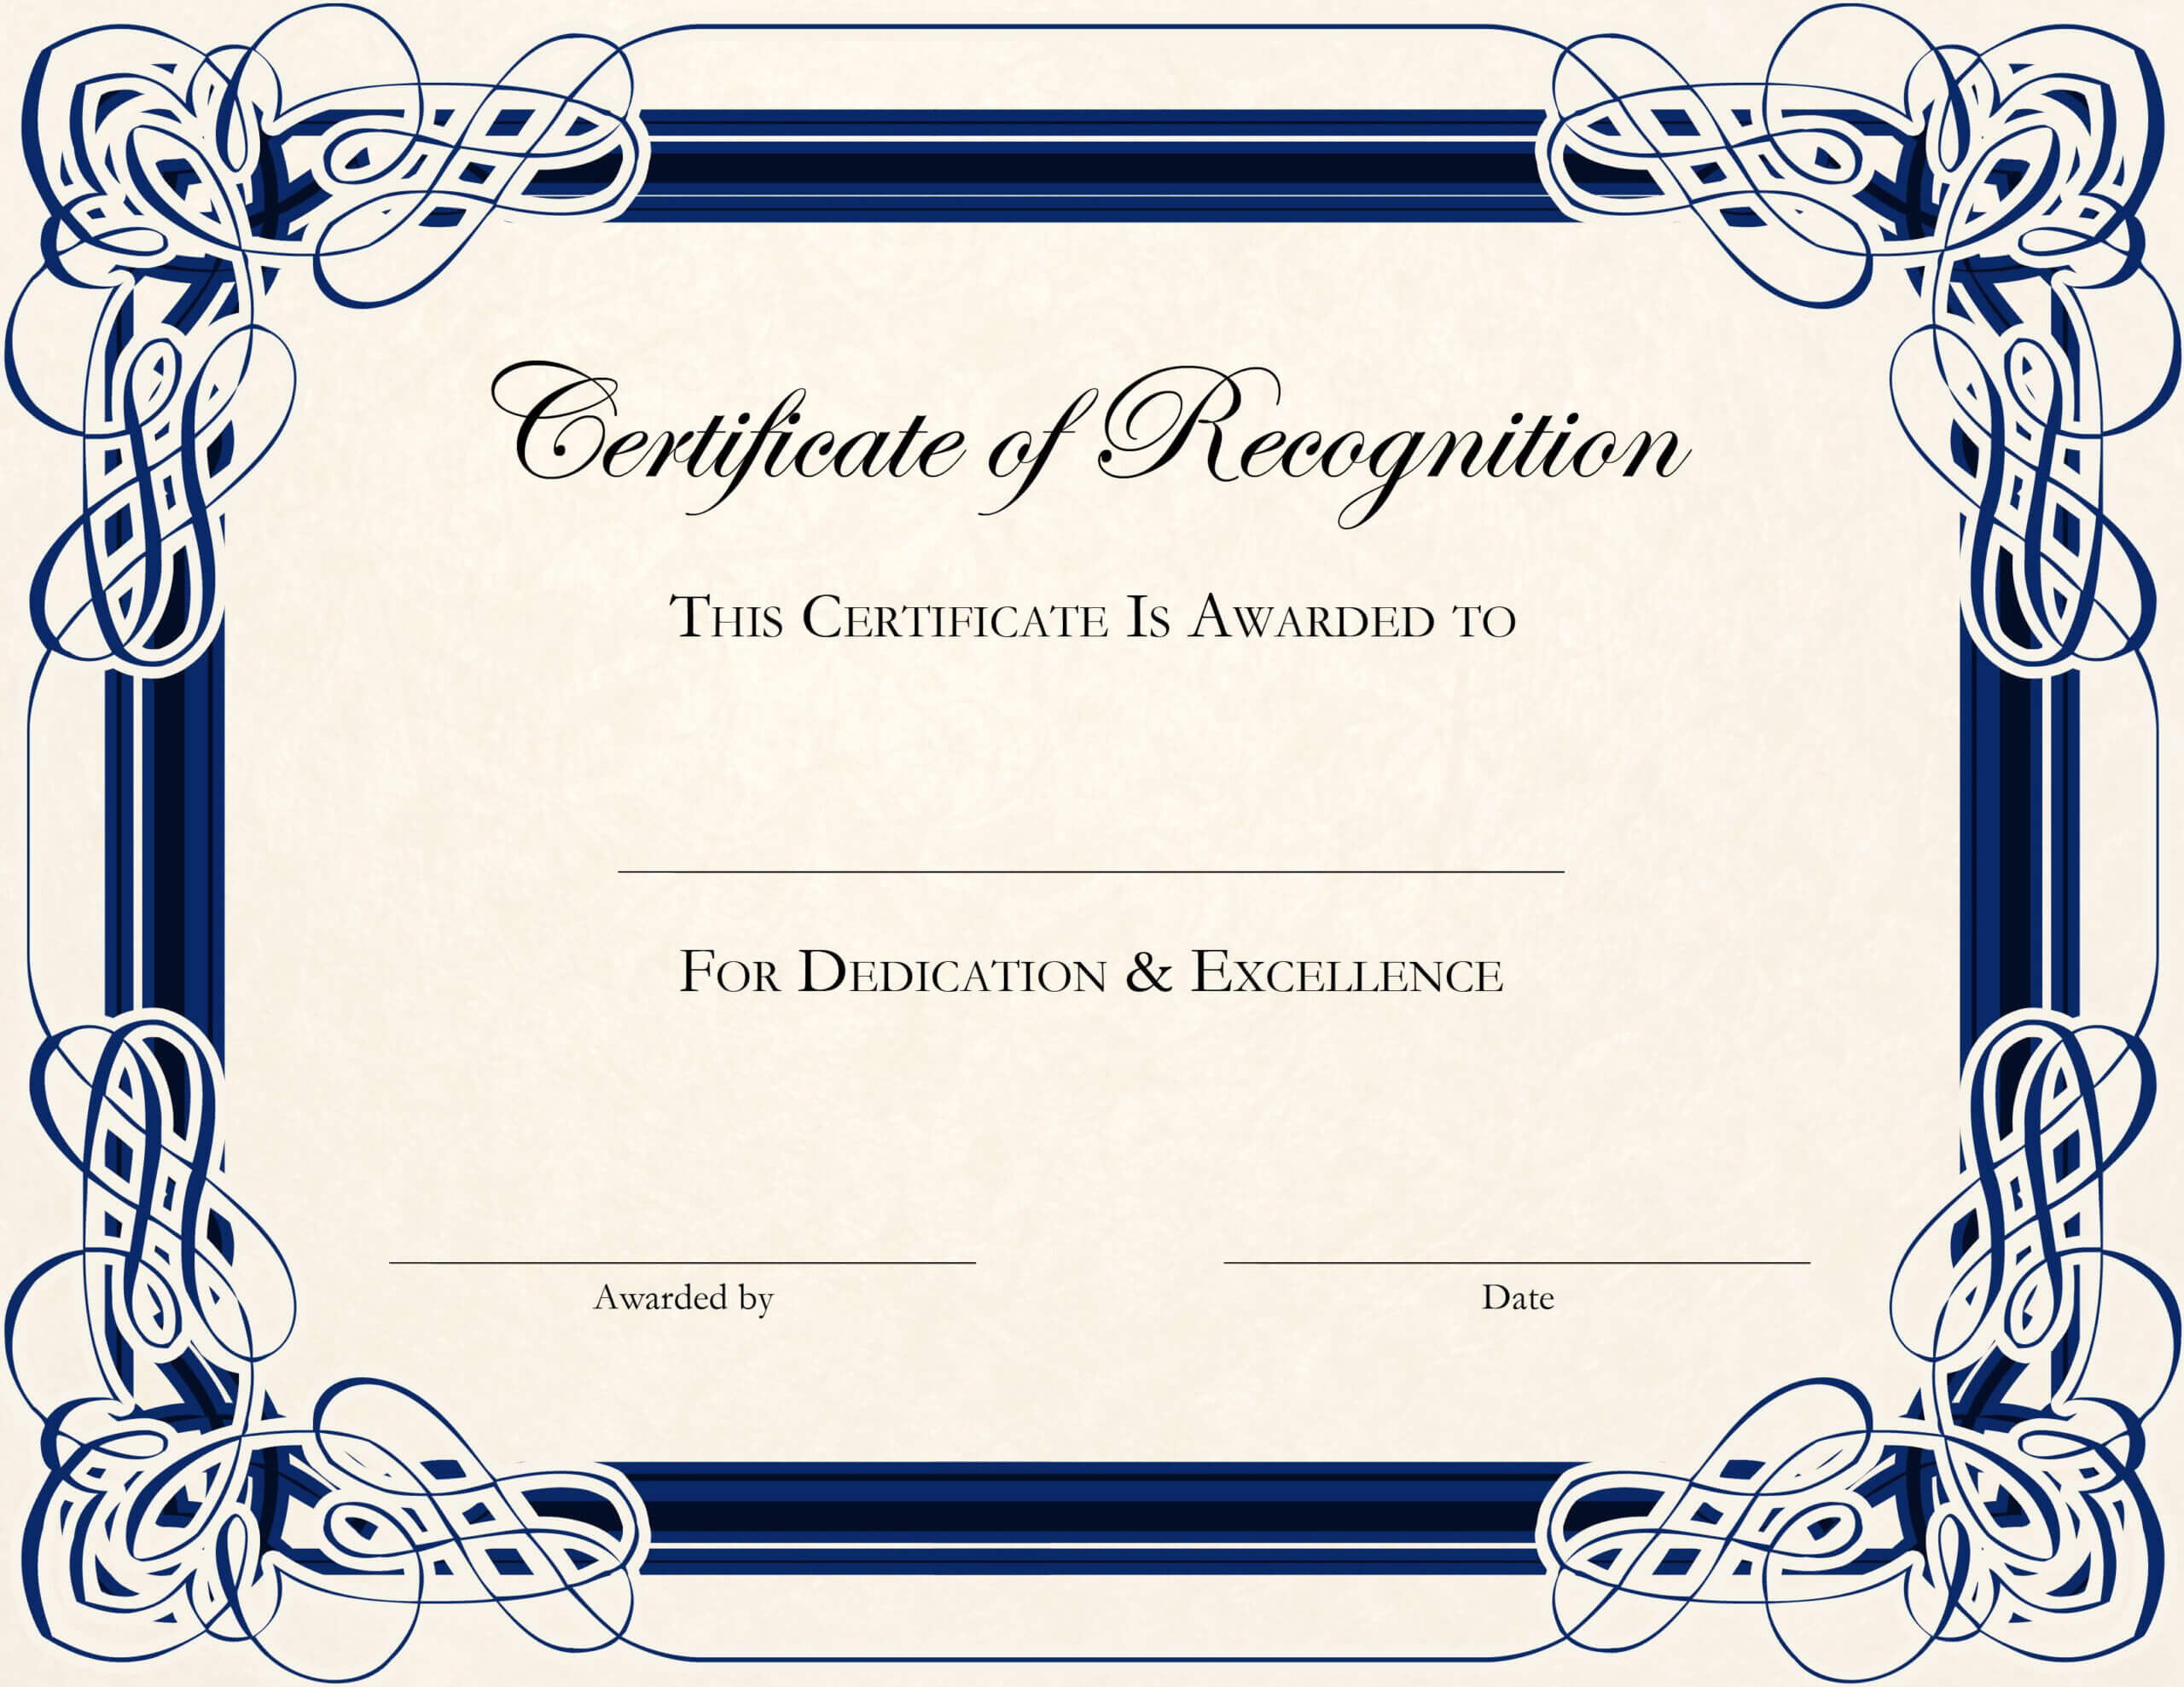 Certificate Template Designs Recognition Docs | Certificate With Template For Certificate Of Award